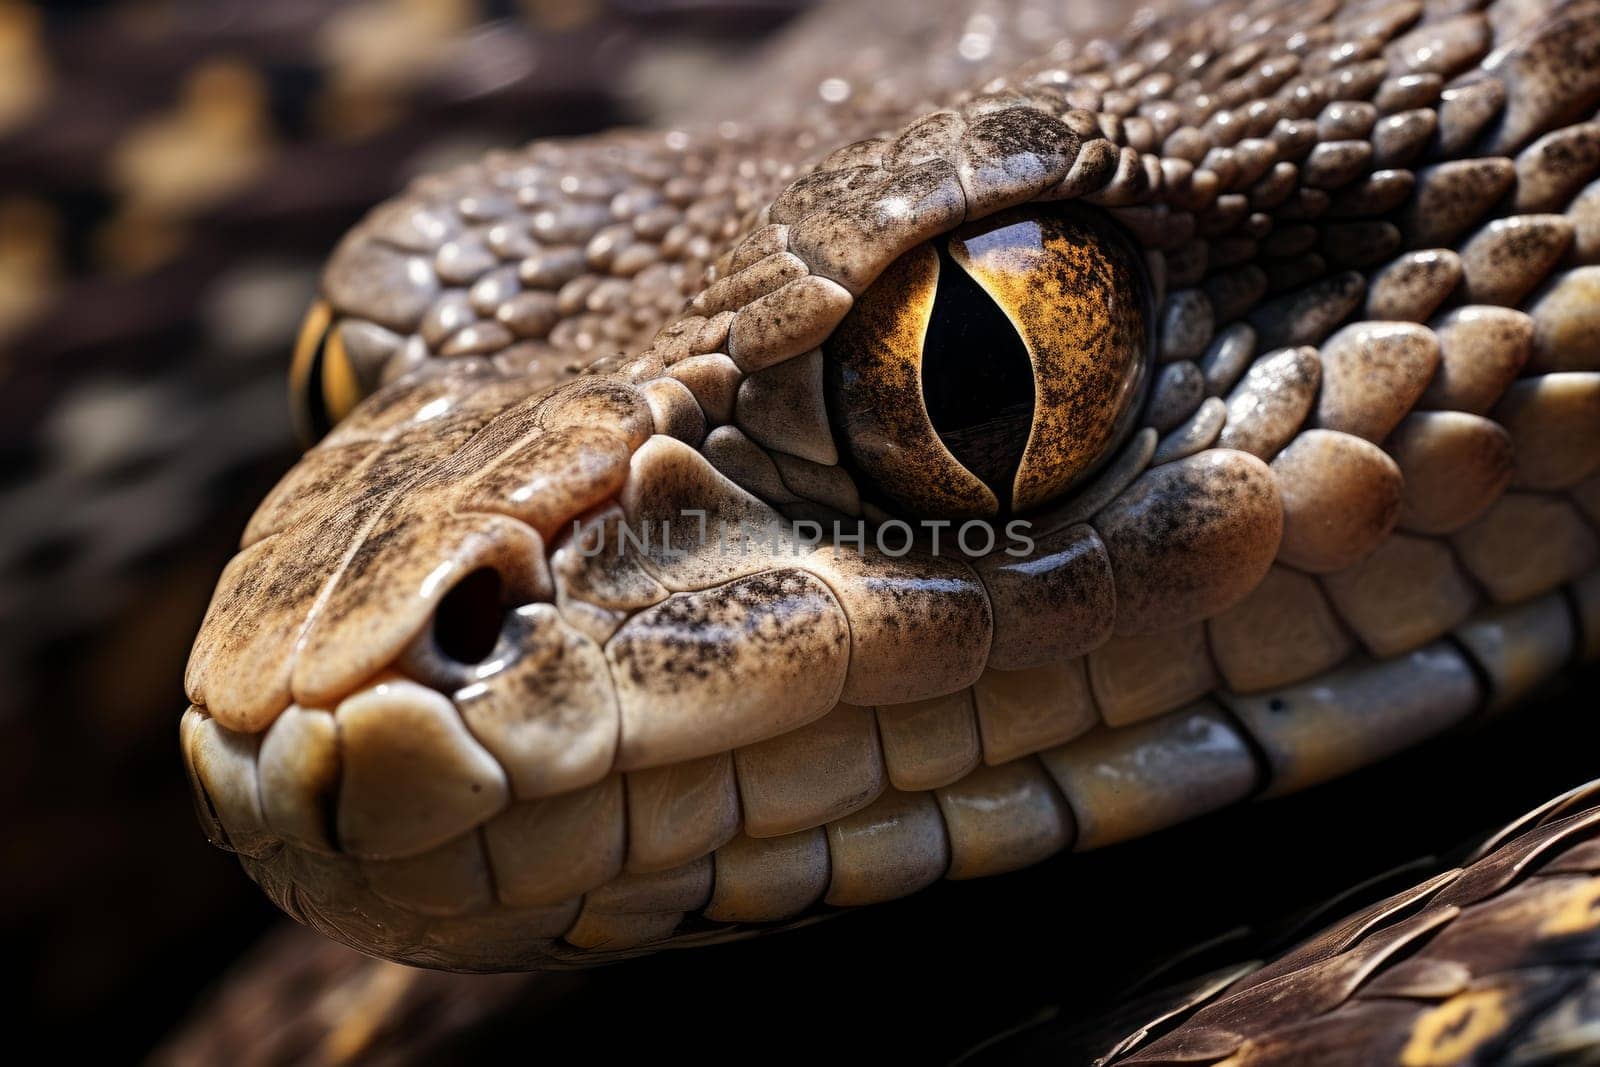 Mesmerizing Phyton snake closeup. Generate Ai by ylivdesign